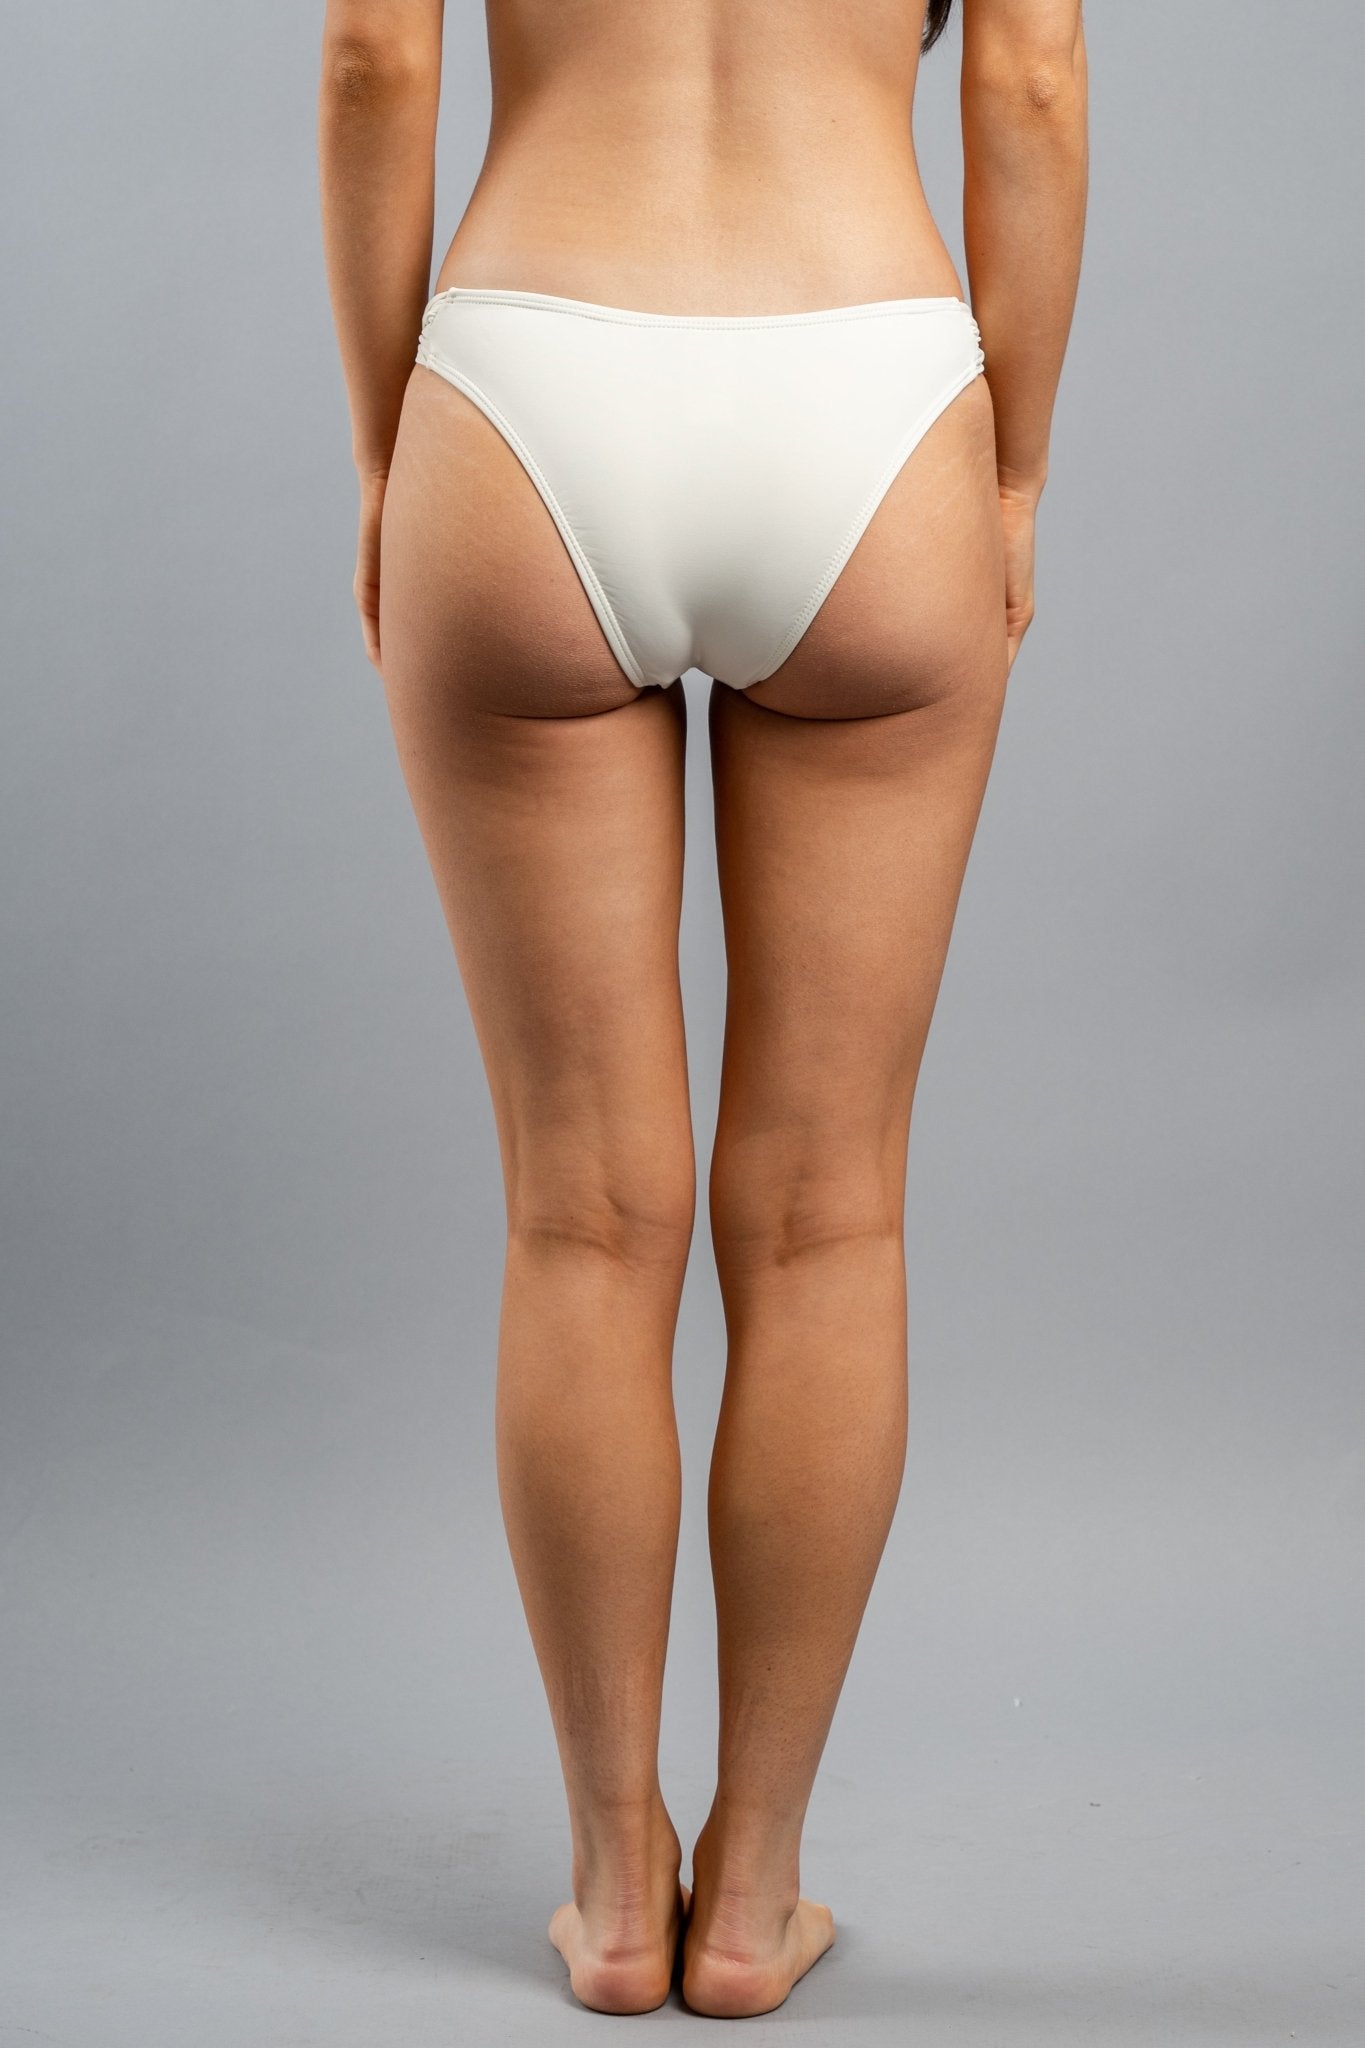 Side twist bikini bottoms white - Cute Swimwear - Affordable Swimsuits at Lush Fashion Lounge Boutique in Oklahoma City